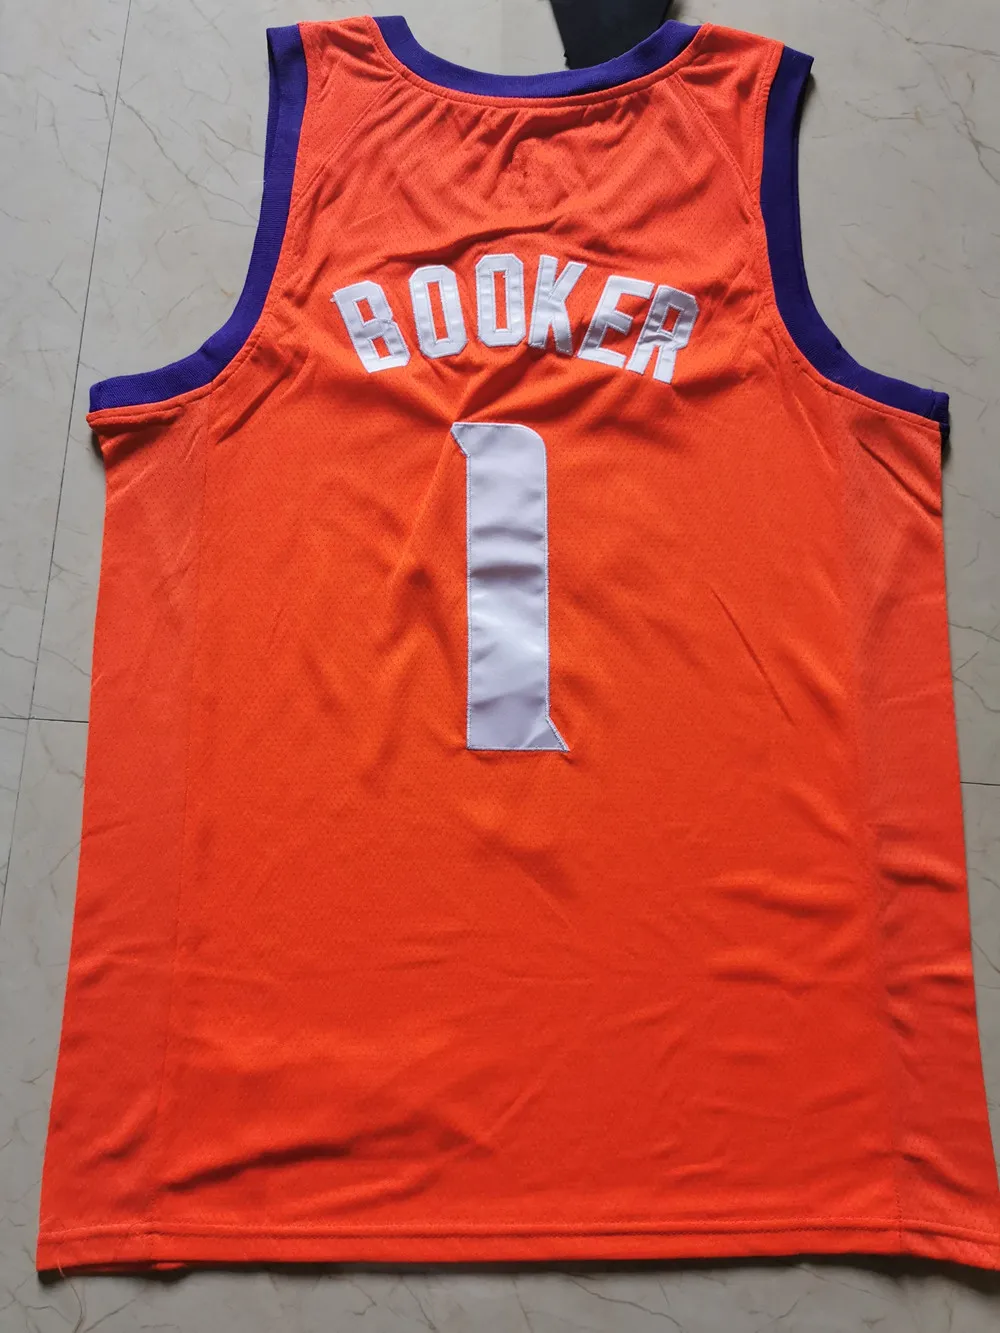 🎽22-23 Wholesale NBA Basketball Jersey Season Suns Durant Kd Chris Paul  Devon Booker Elton Jersey Announcement Version Of City 35